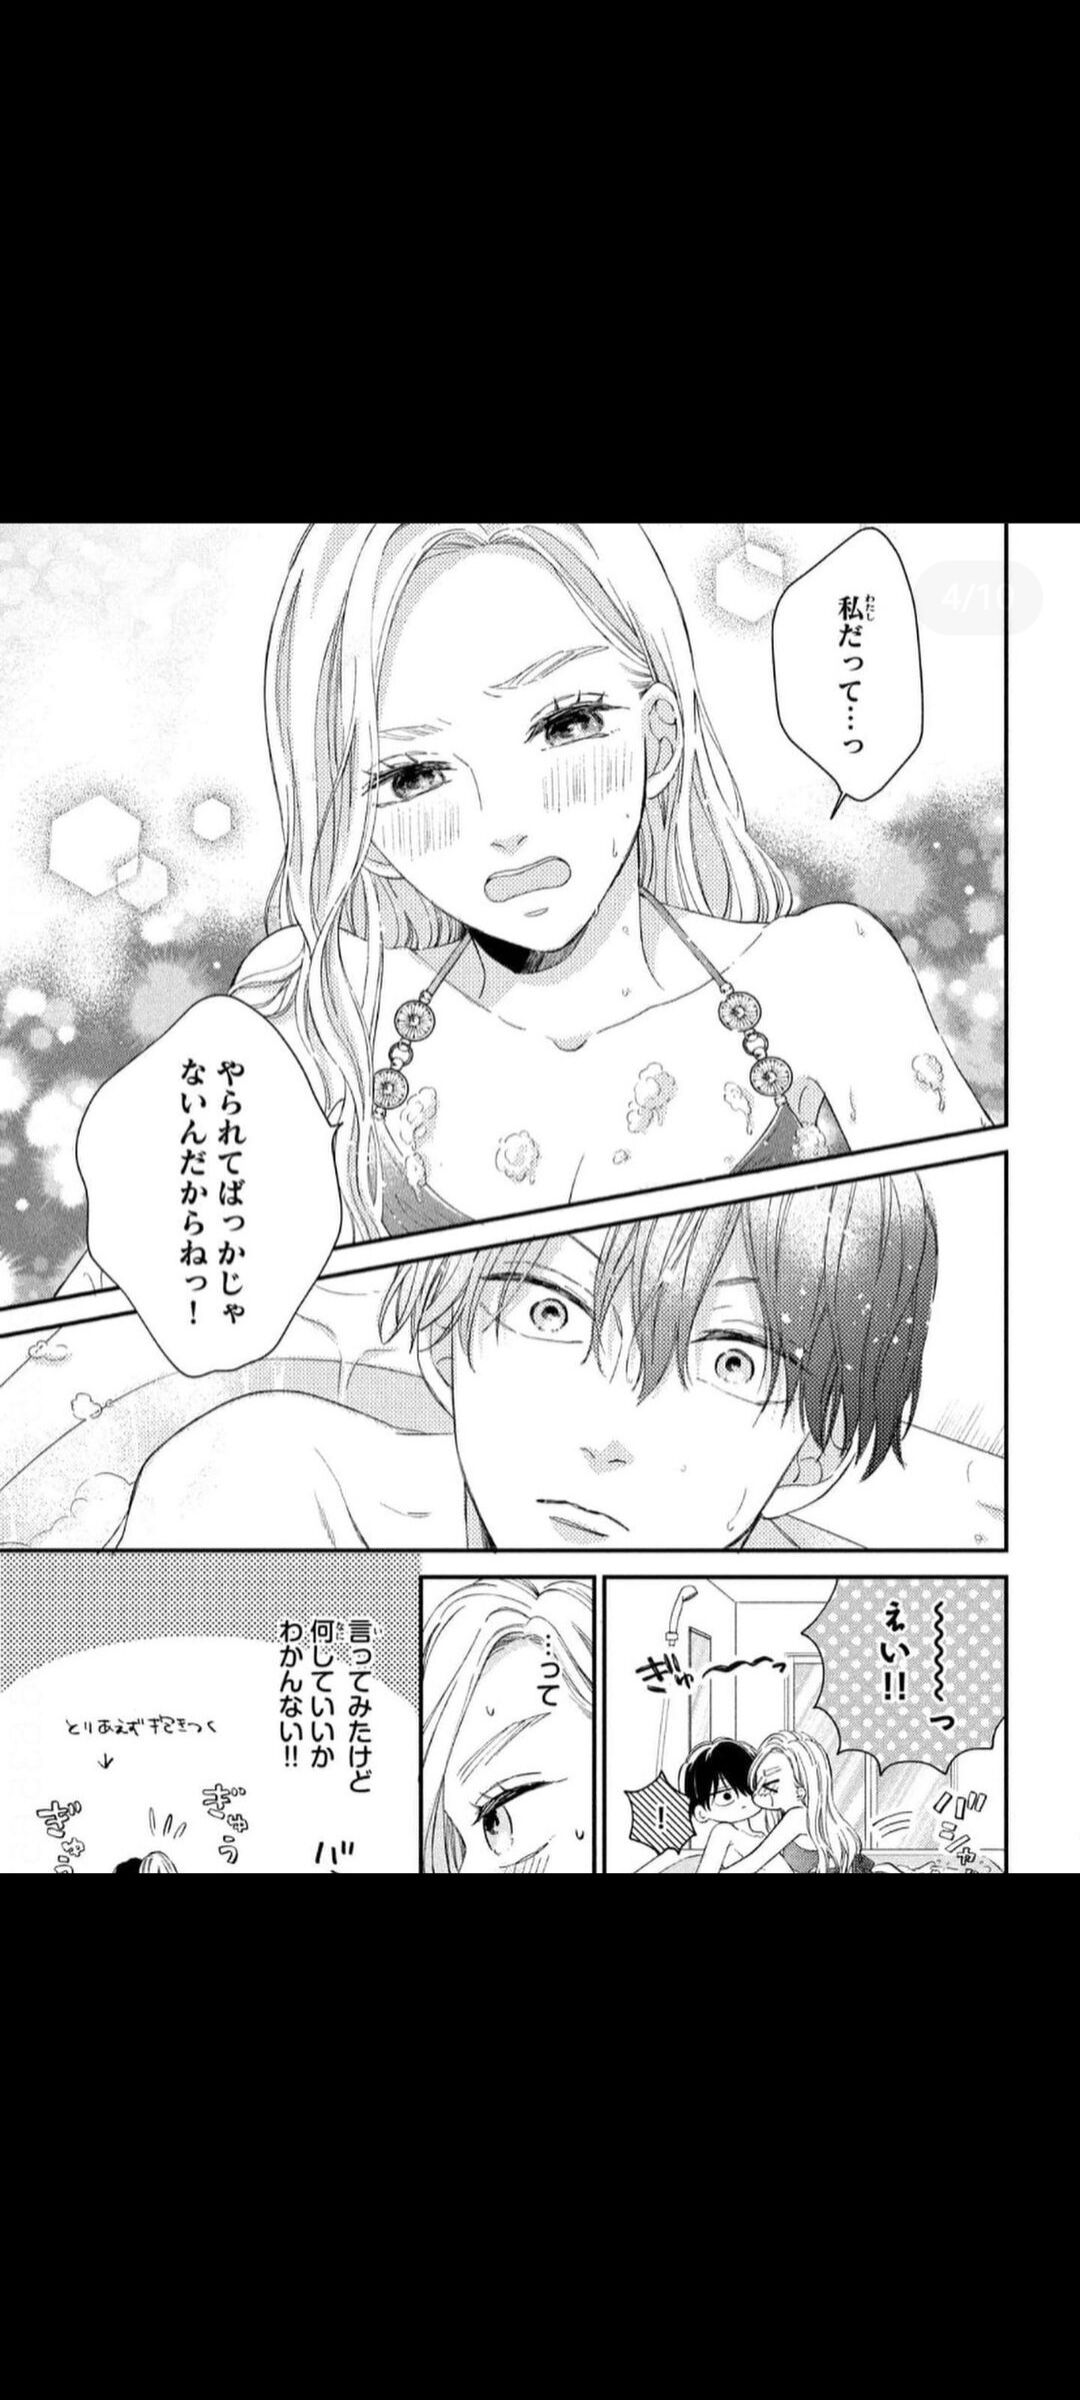 Neko To Kiss Chapter 24 Neko to kiss - Read Free Manga Online at Bato.To